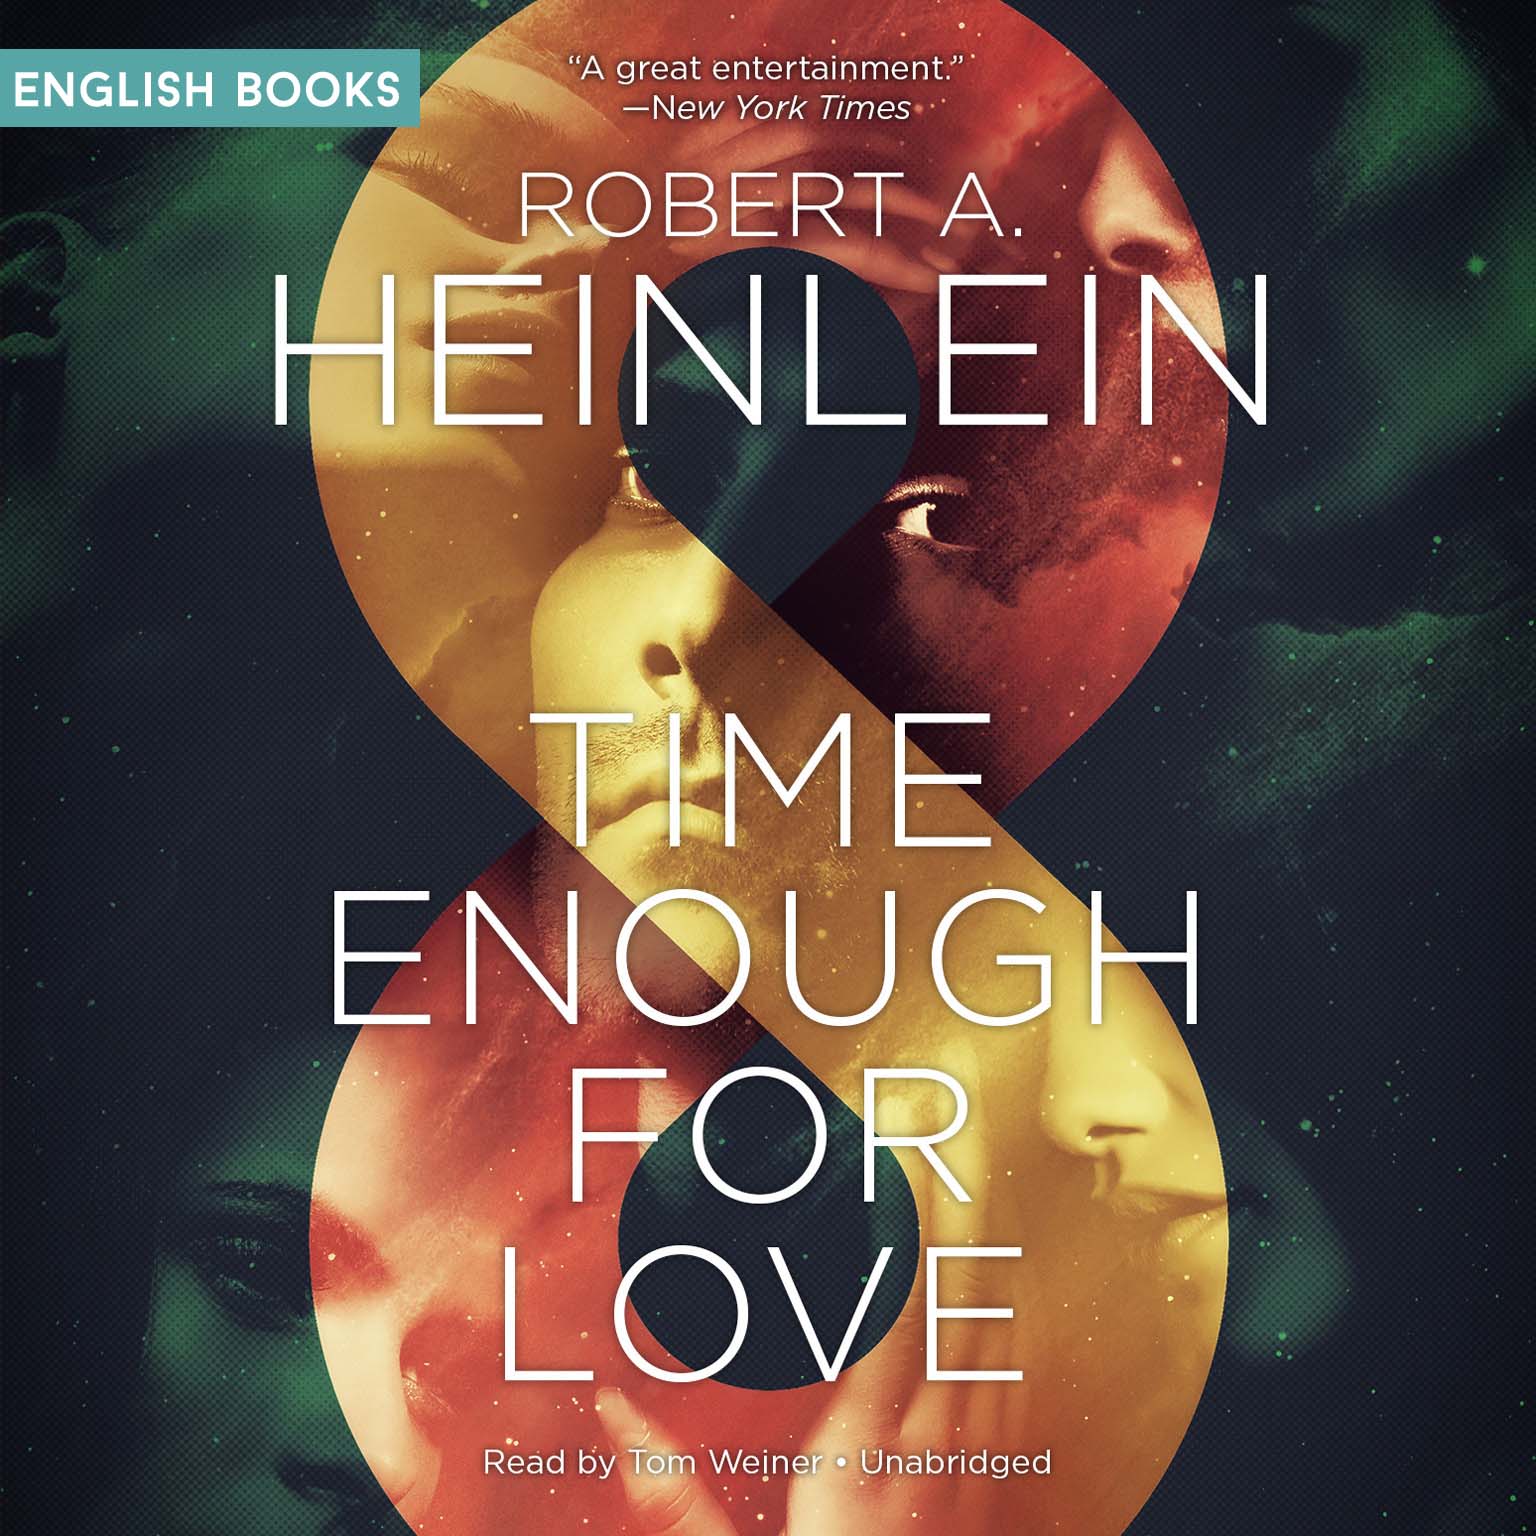 Robert Heinlein —Time Enough For Love